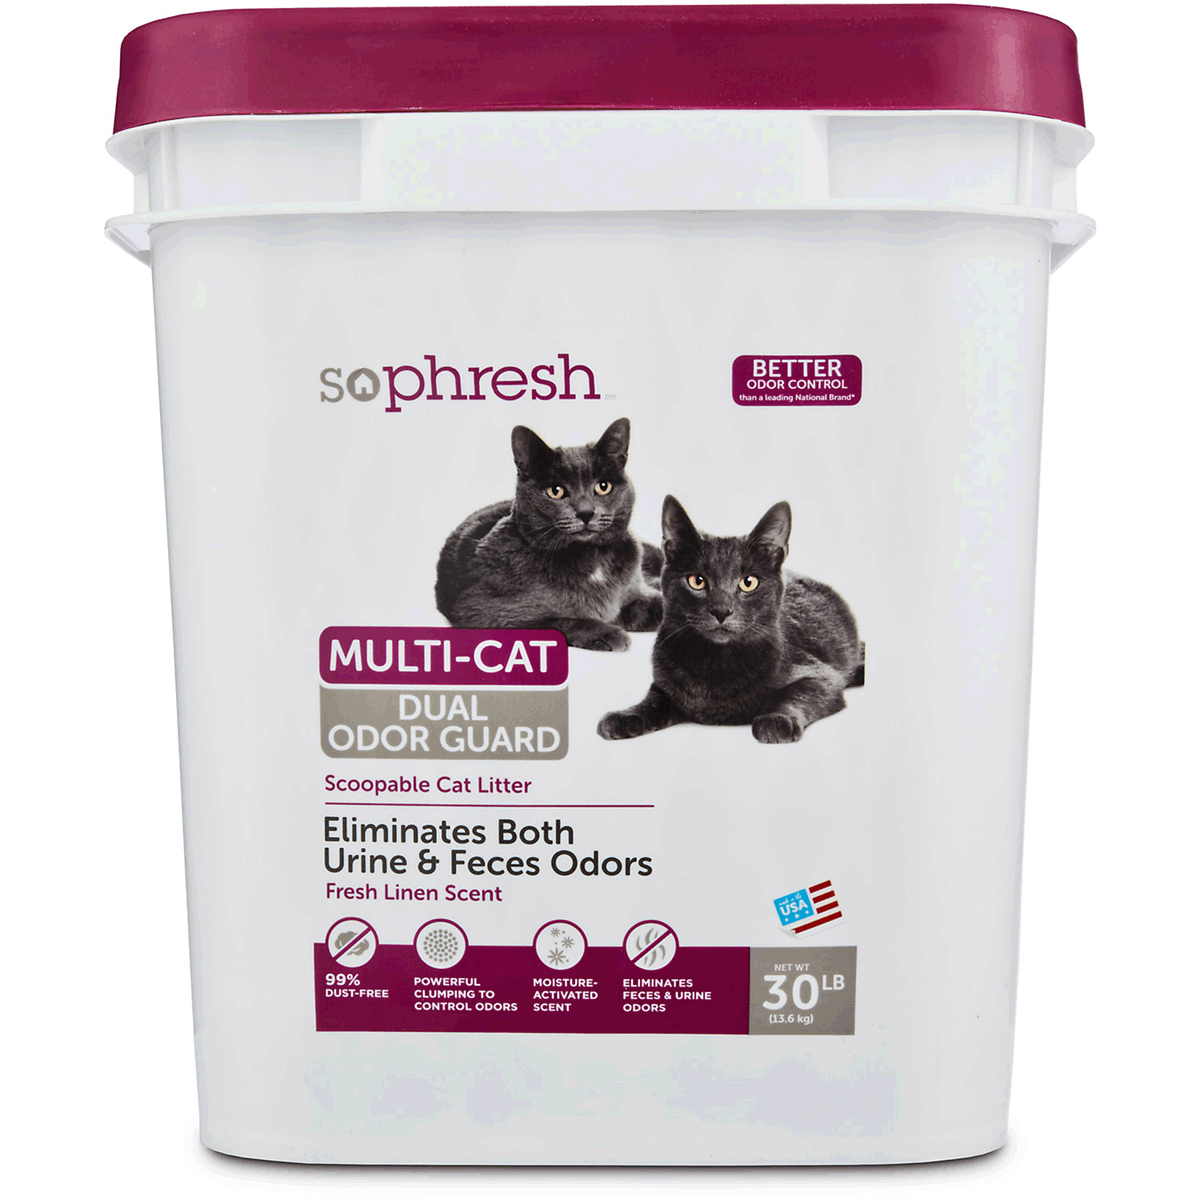 Sophresh Multi-Cat Dual Odor Guard Arena Aglutinante con Esencia para Hogares Multi-Gato, 13.6 kg